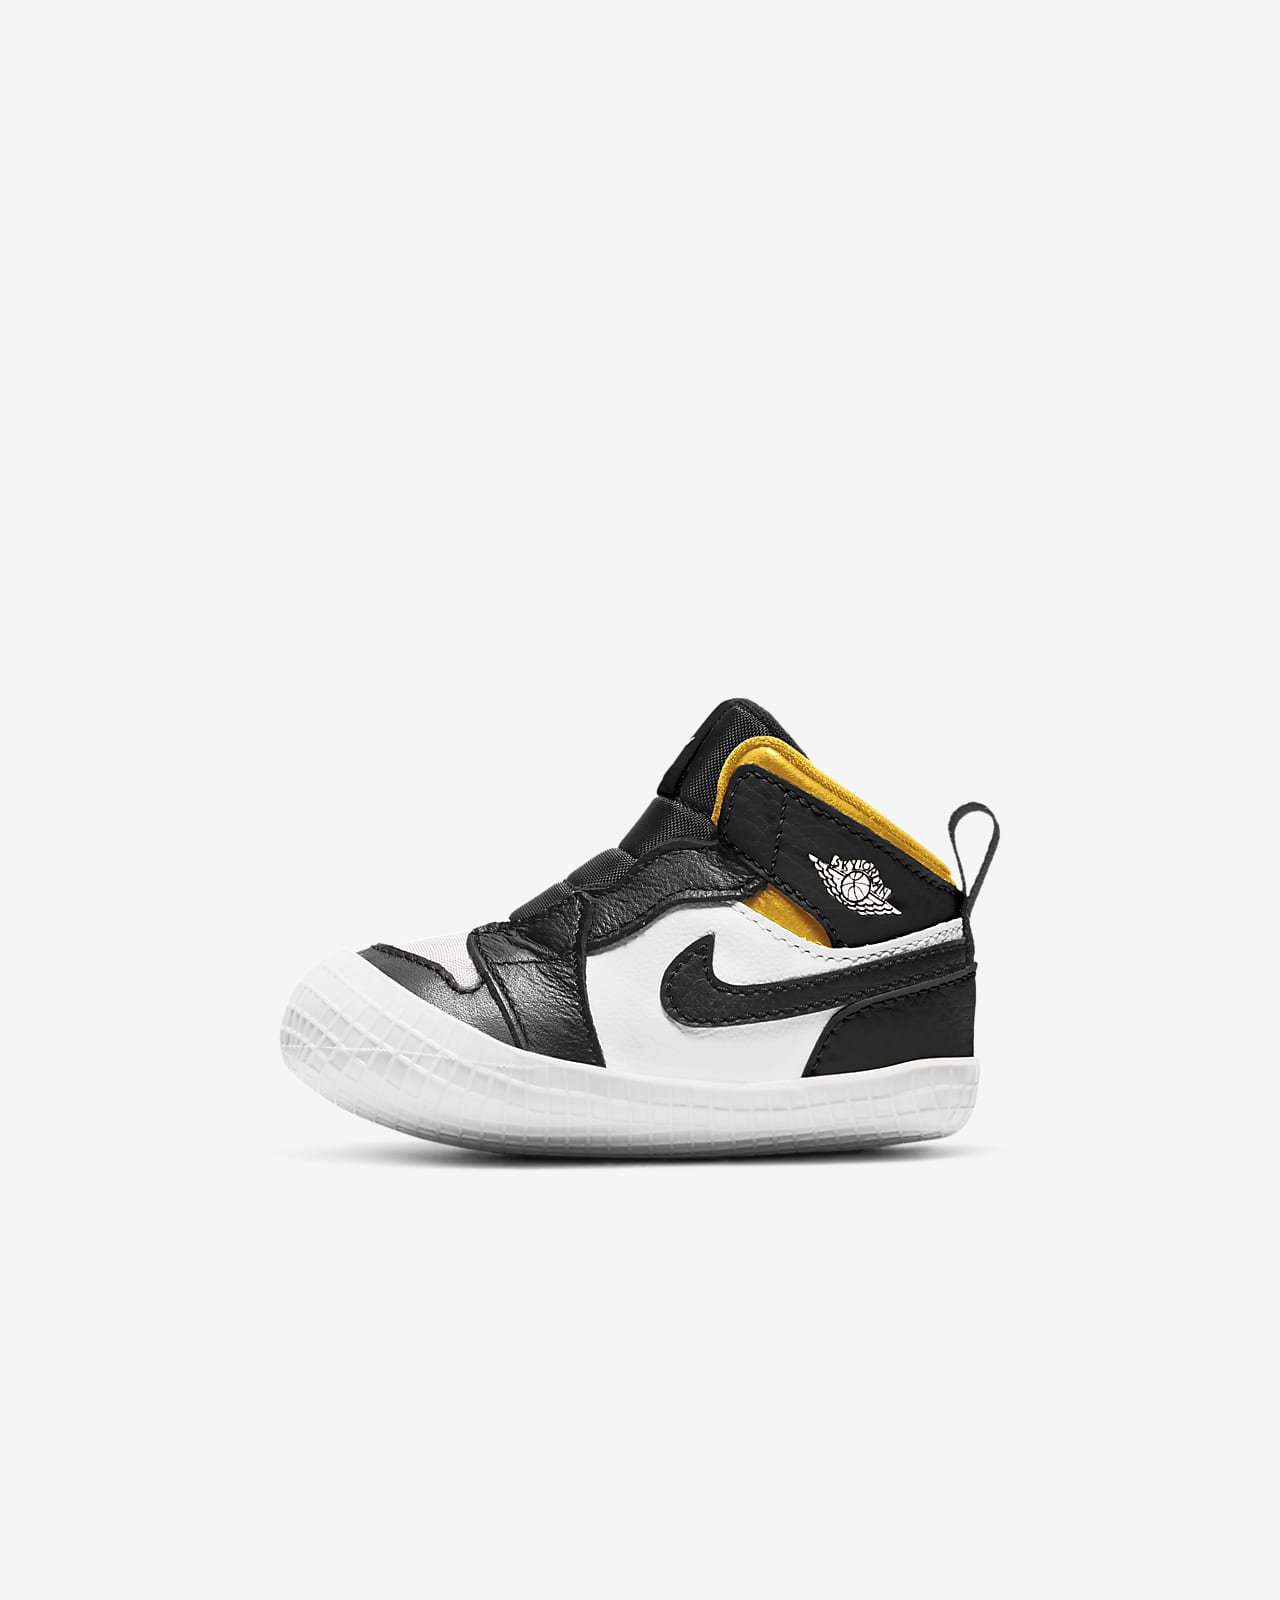 Nike Baby Jordan Shoes Flash Sales 